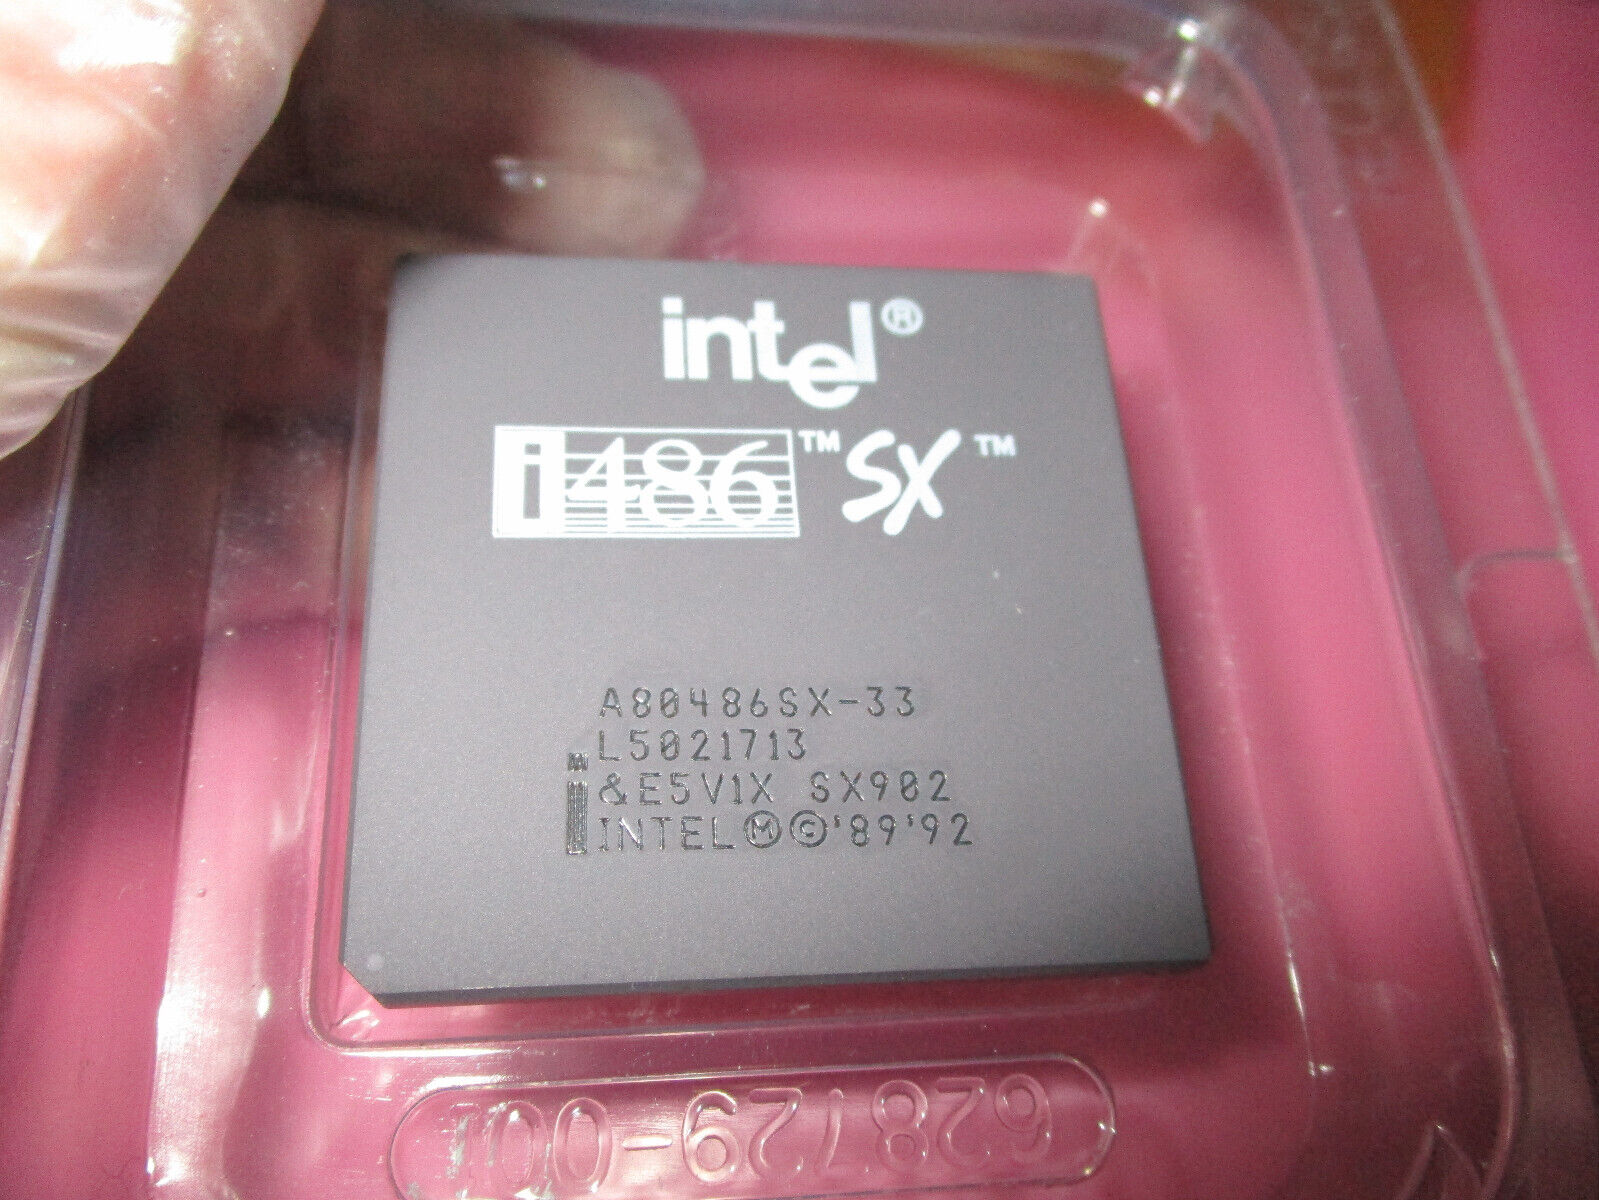 Lot 5 Intel 486SX-33  Mint shape in clam shells